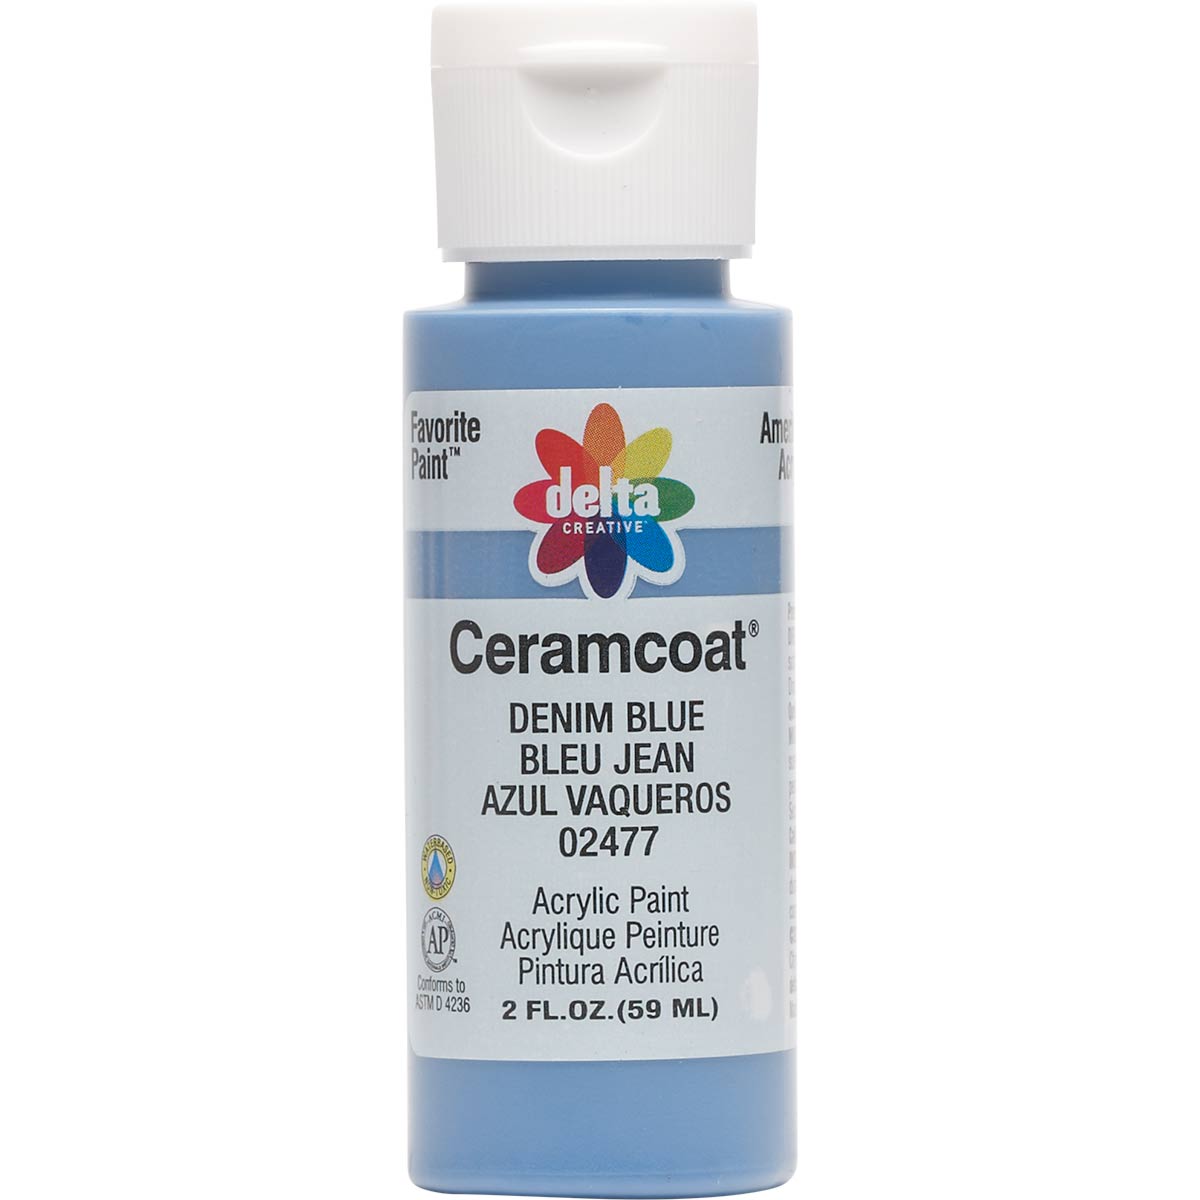 Delta Ceramcoat Acrylic Paint - Denim Blue, 2 oz. - 024770202W